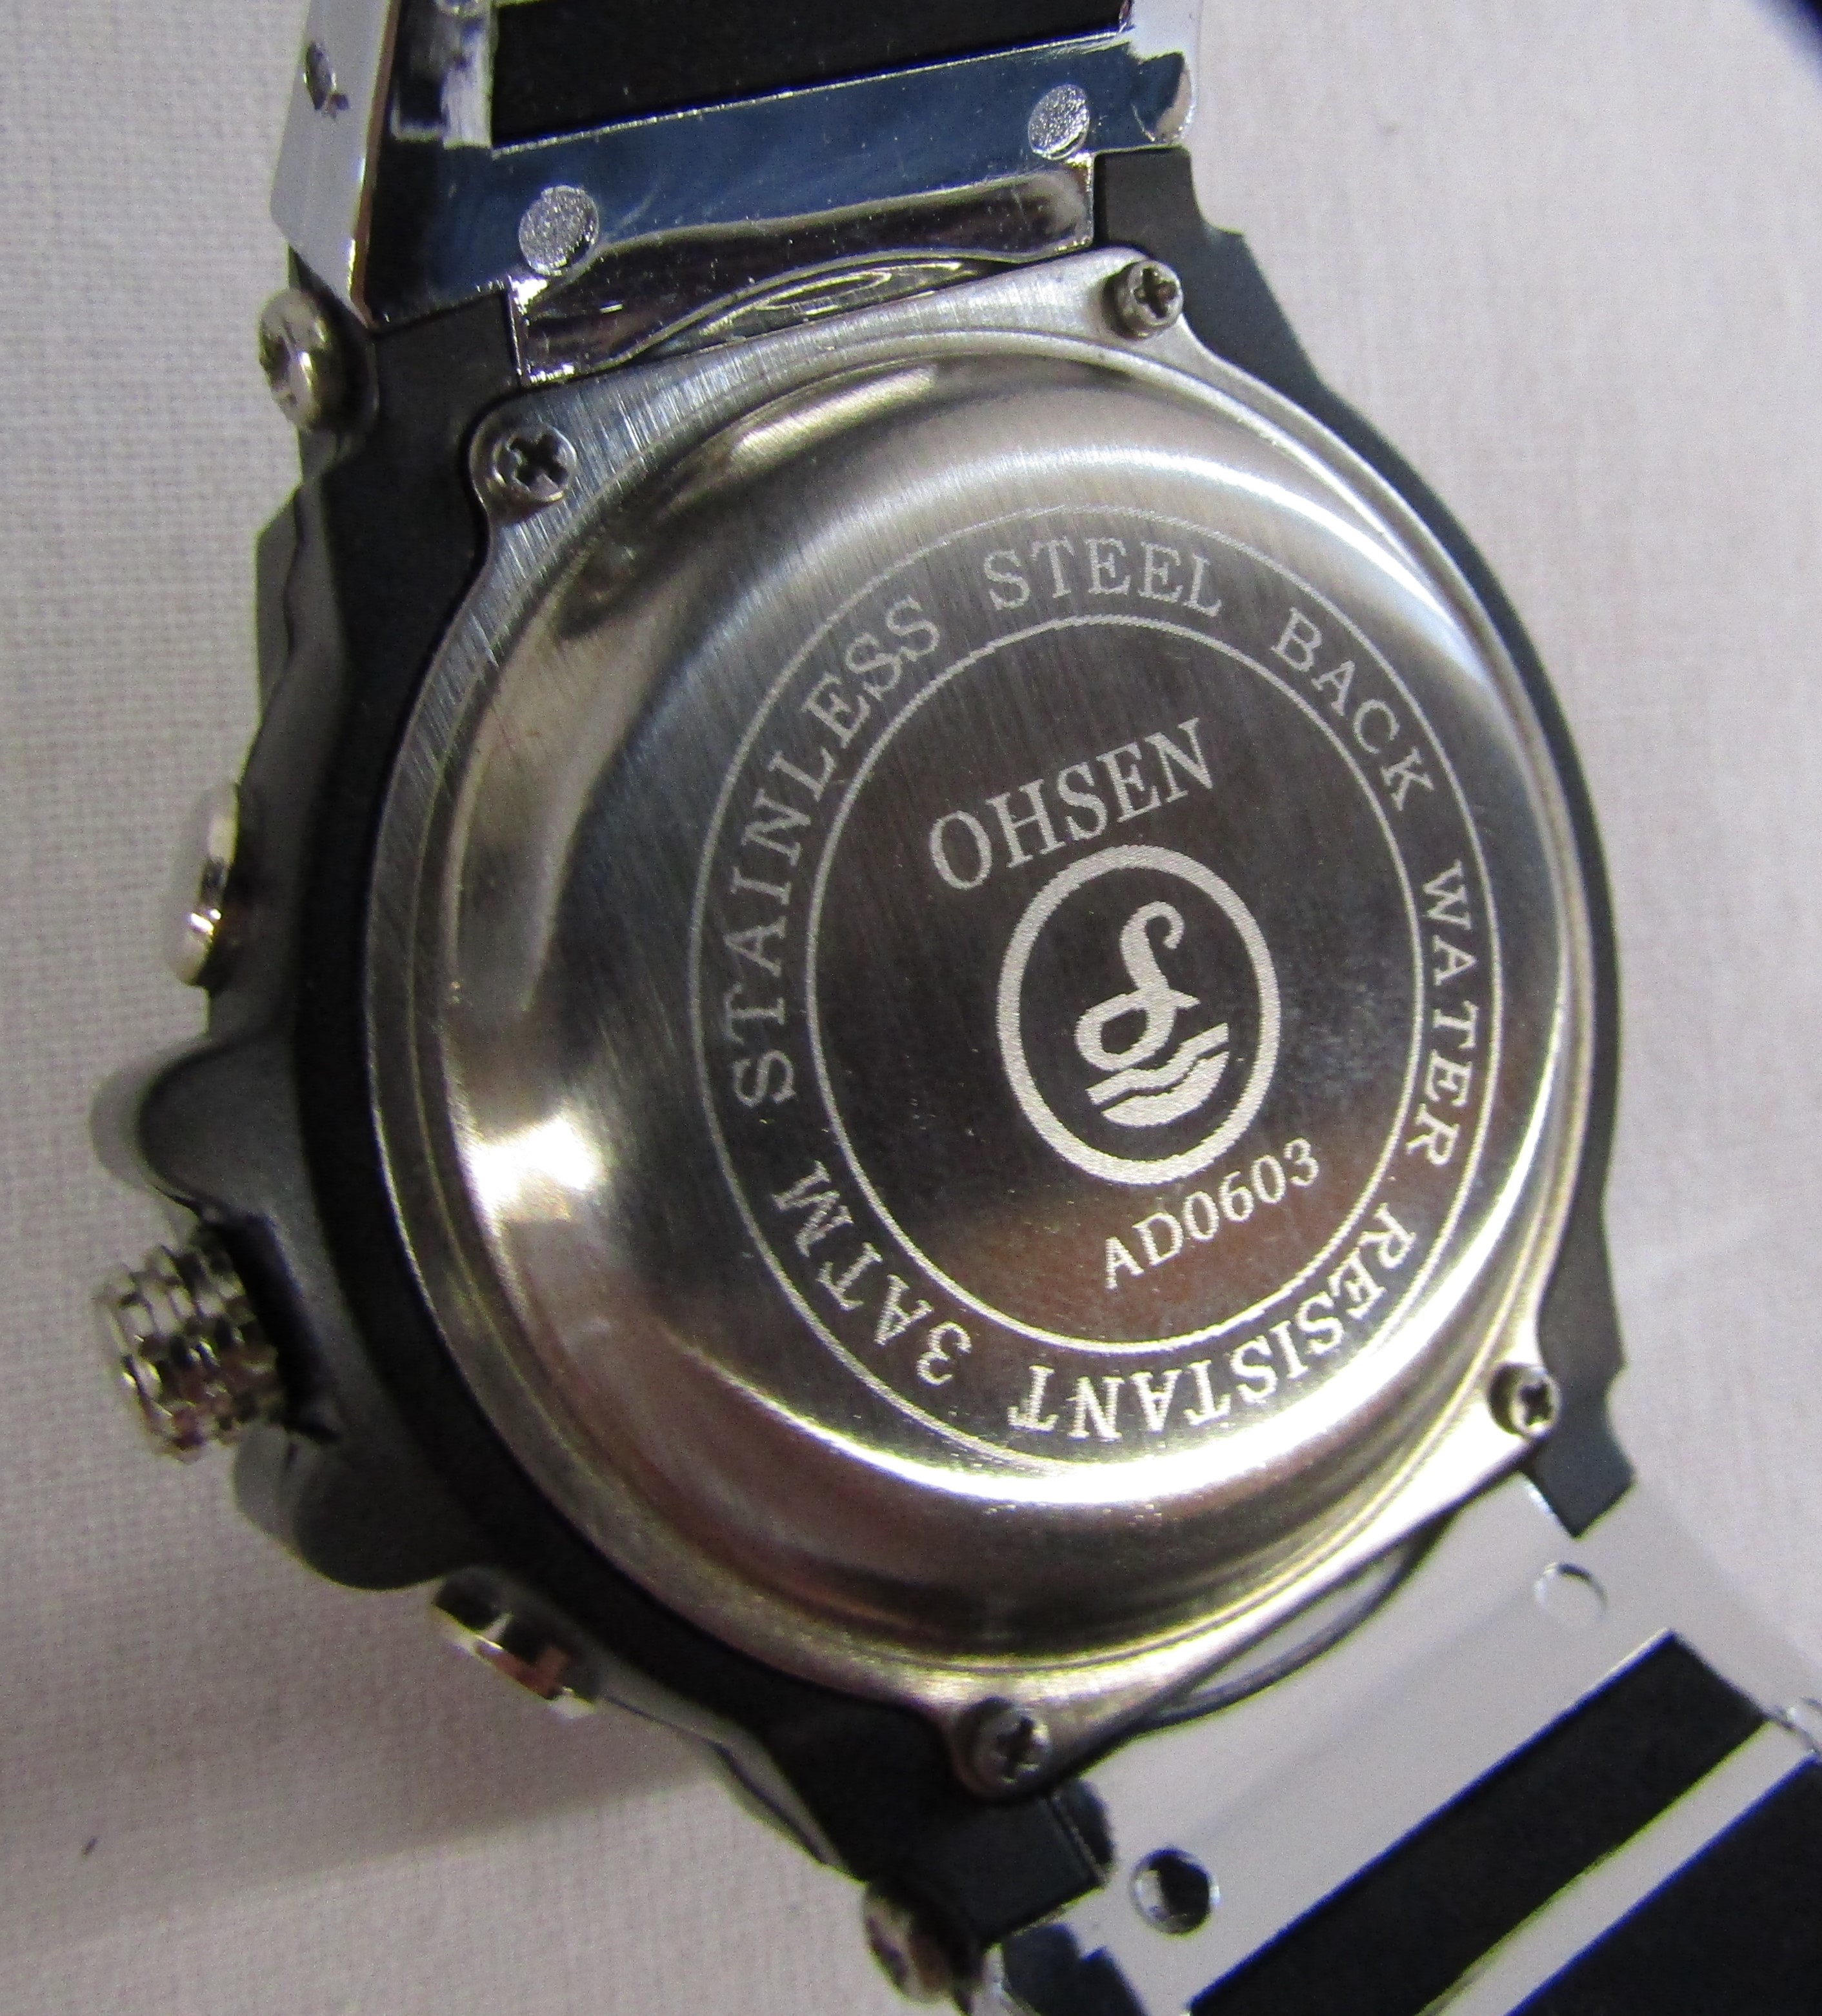 6 men's cased watches - 2 x Finotime 739 - Finotime 6008 - Ohsen AD603 - 2 x Skmei 1013 - Image 7 of 12